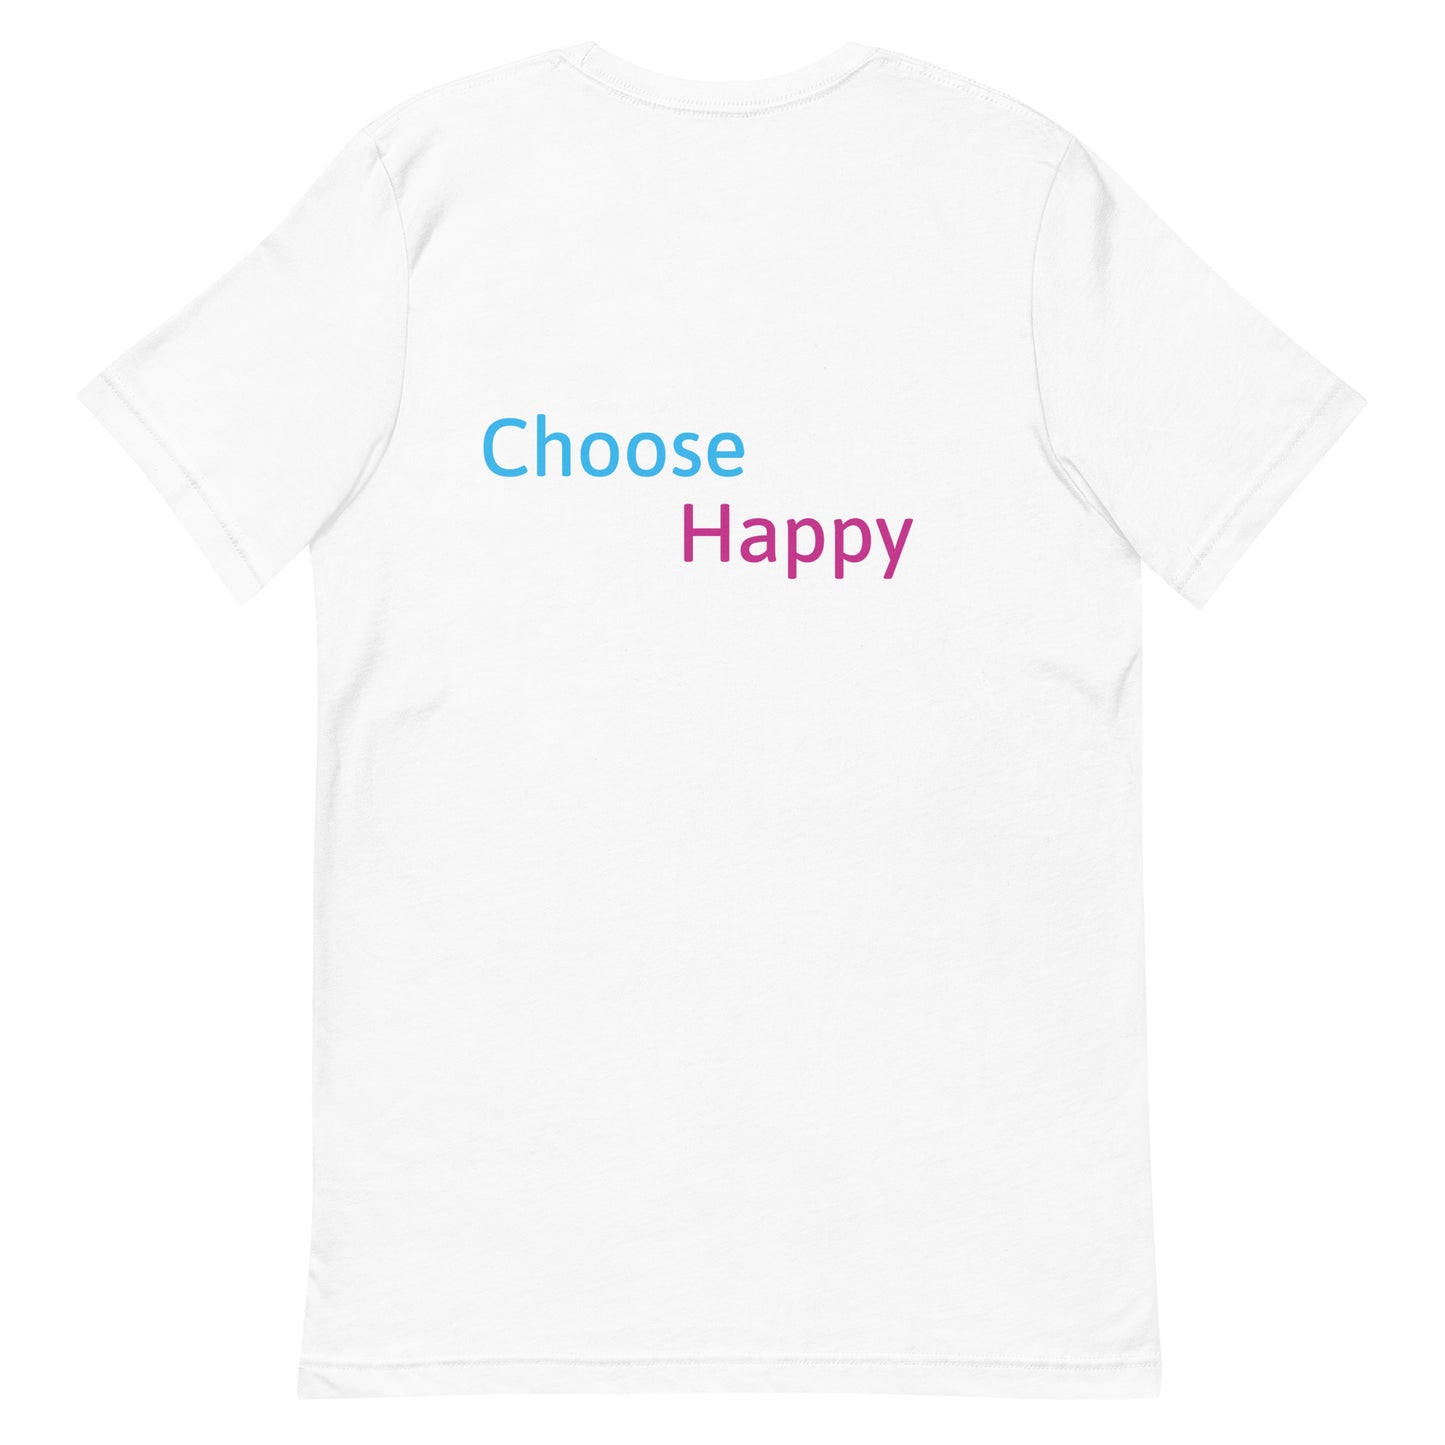 Choose Happy t-shirt